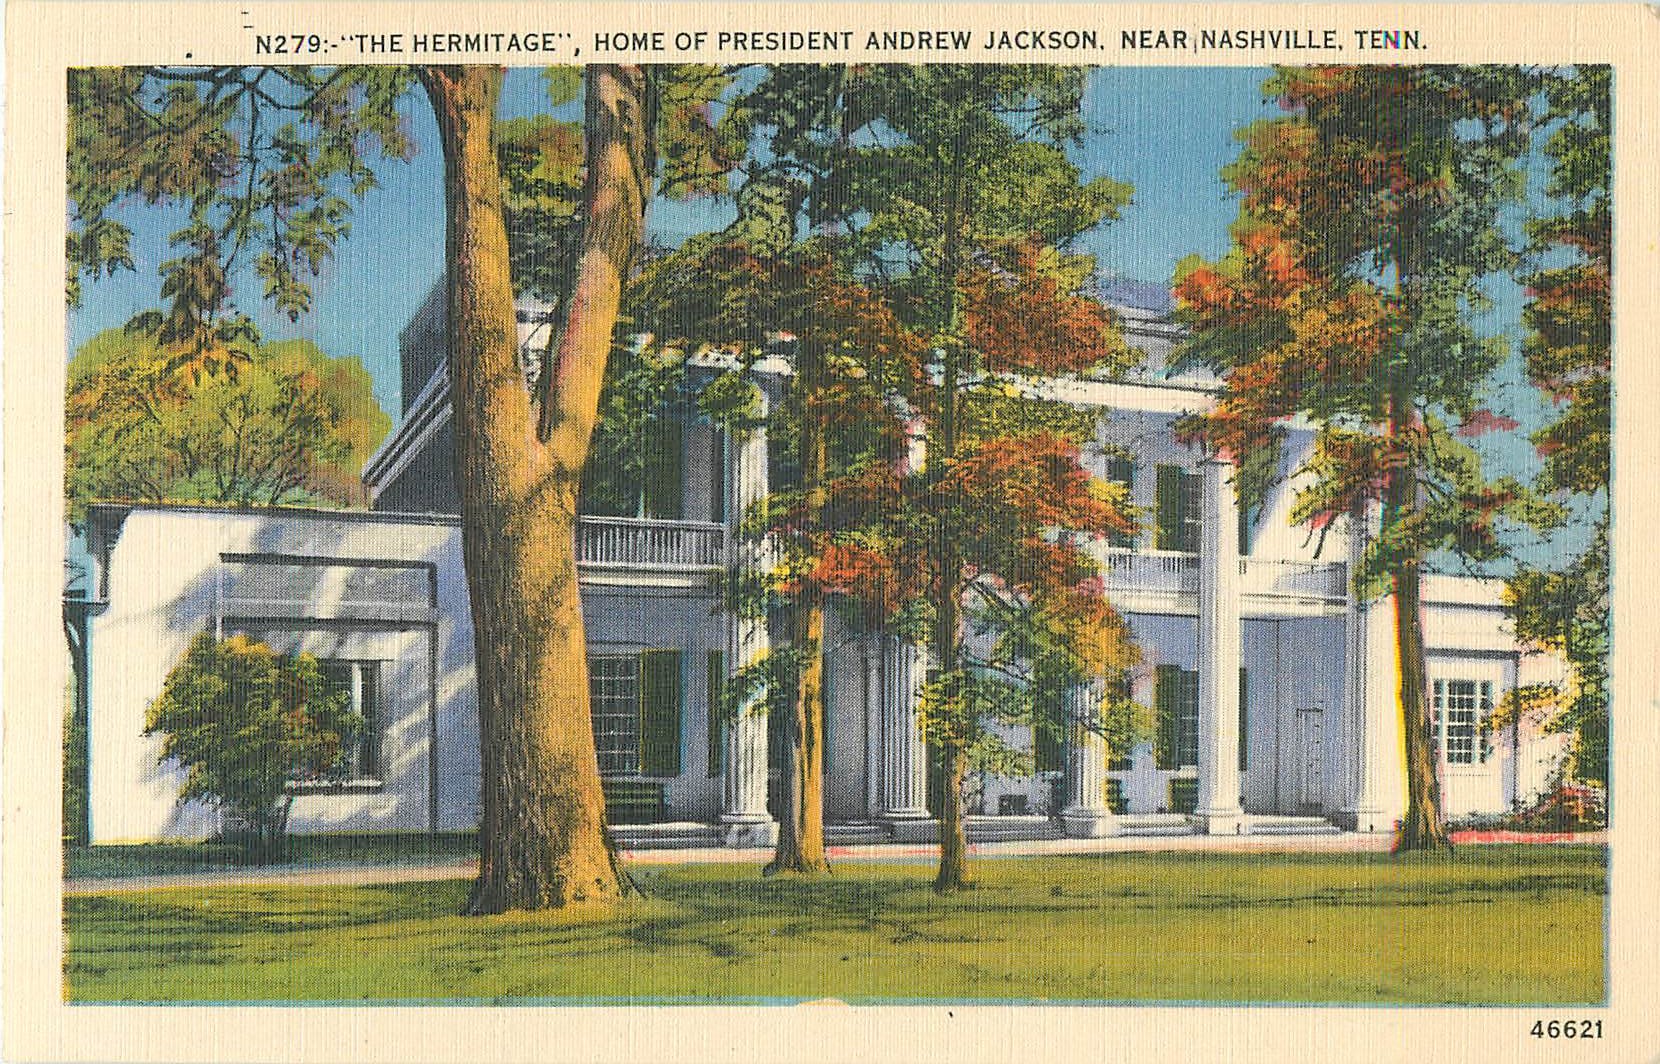 "The Hermitage, Home Of President Andrew Jackson"